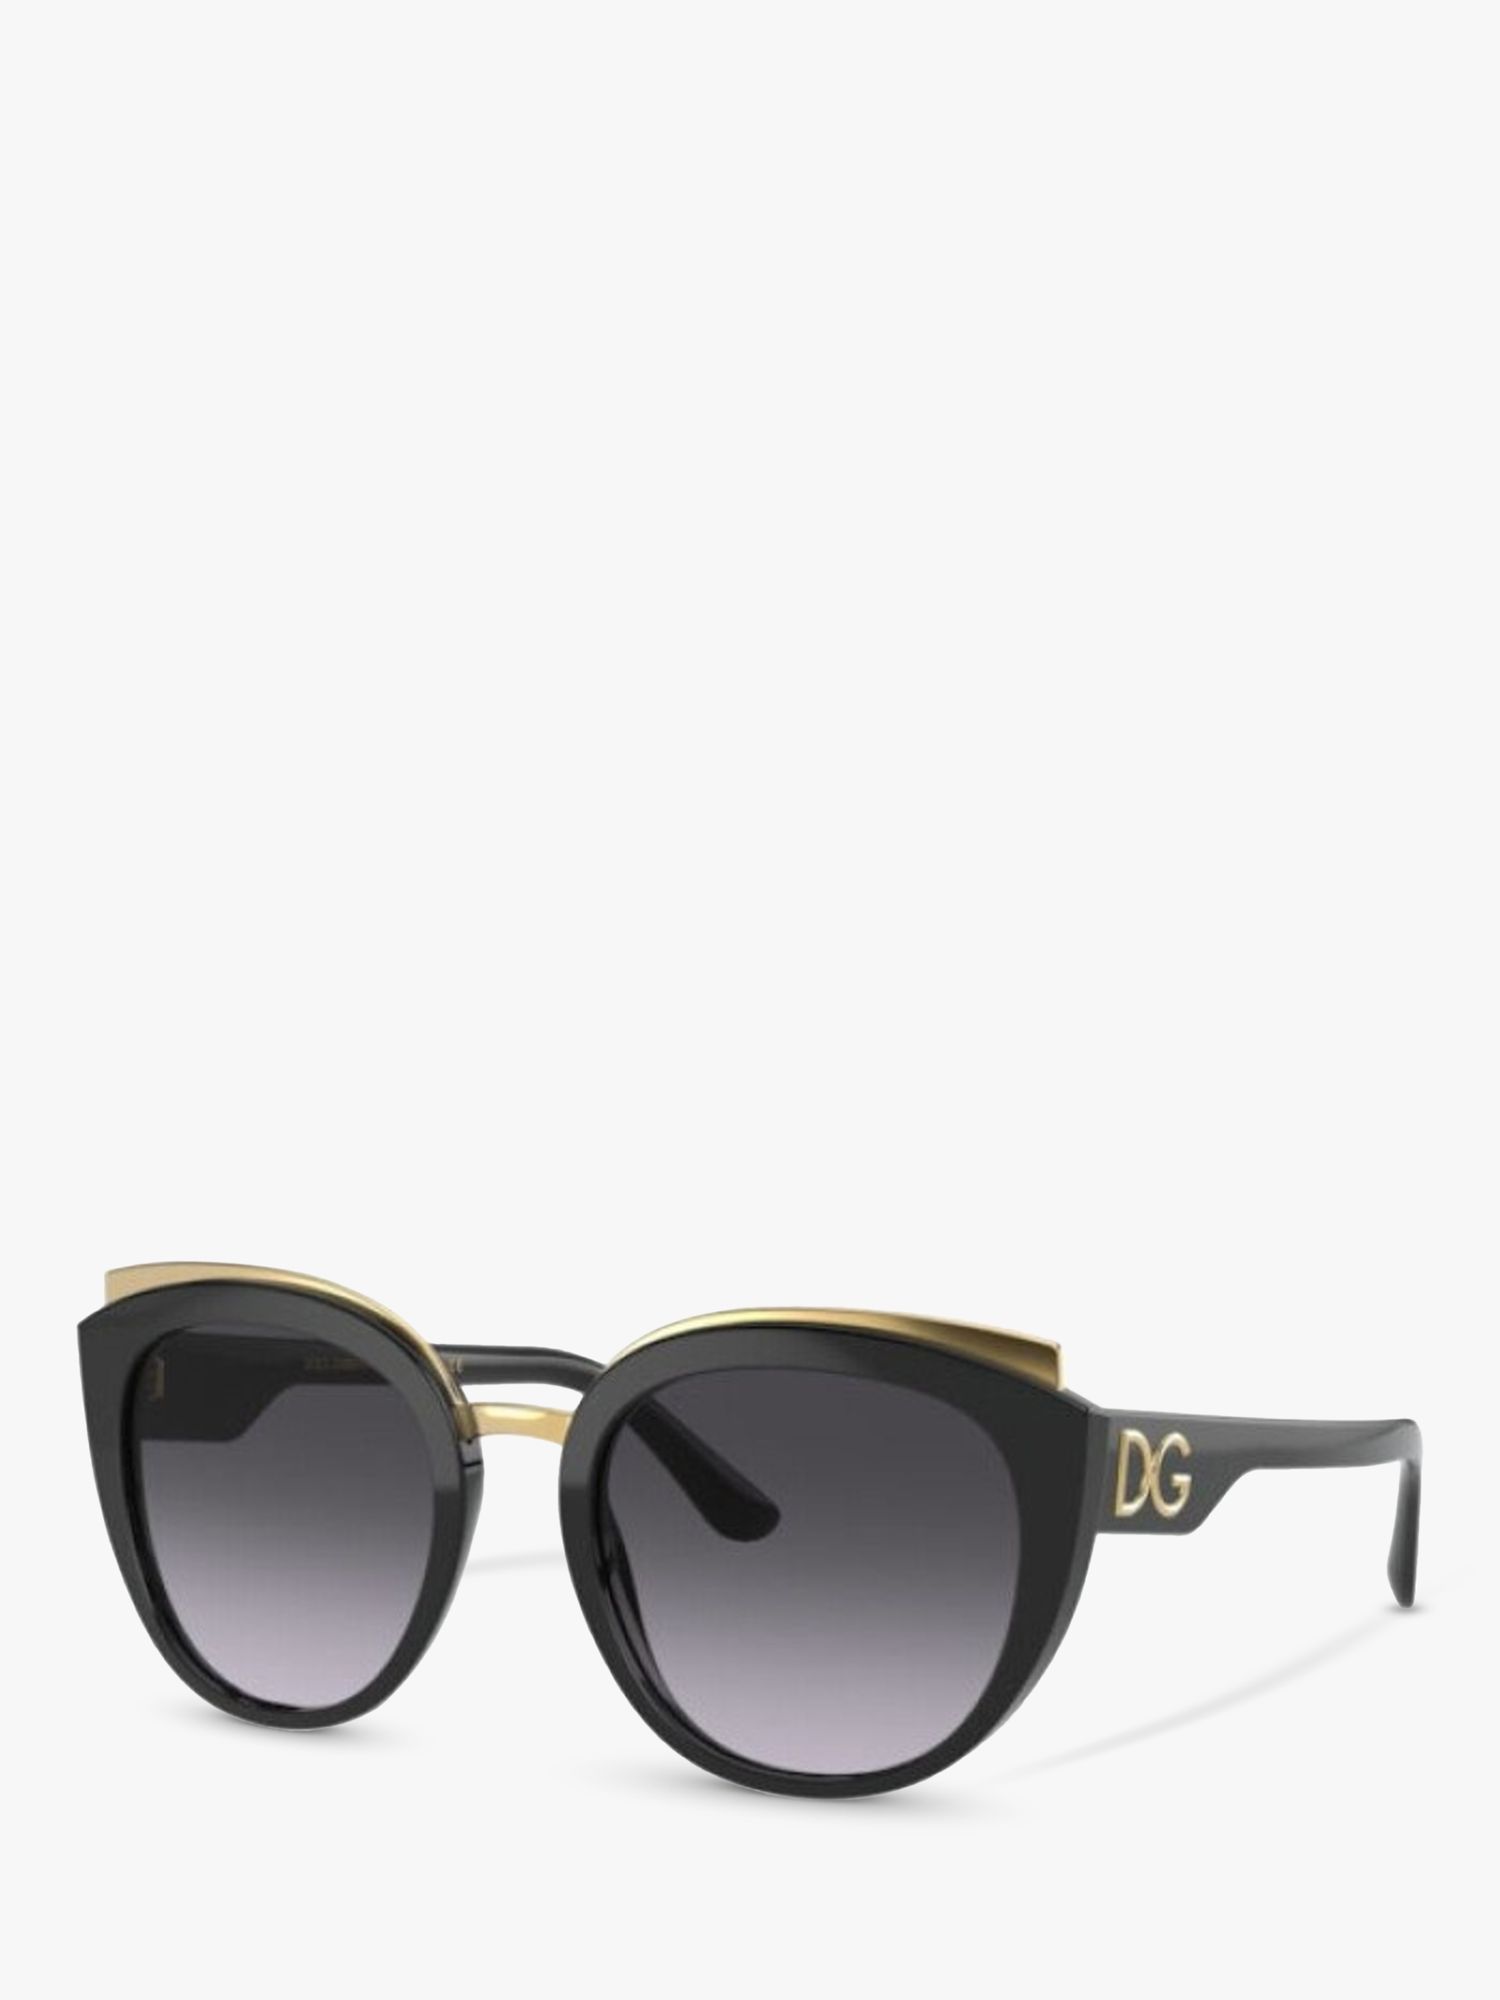 Dolce & Gabbana DG4383 Women's Butterfly Sunglasses, Black/Grey Gradient